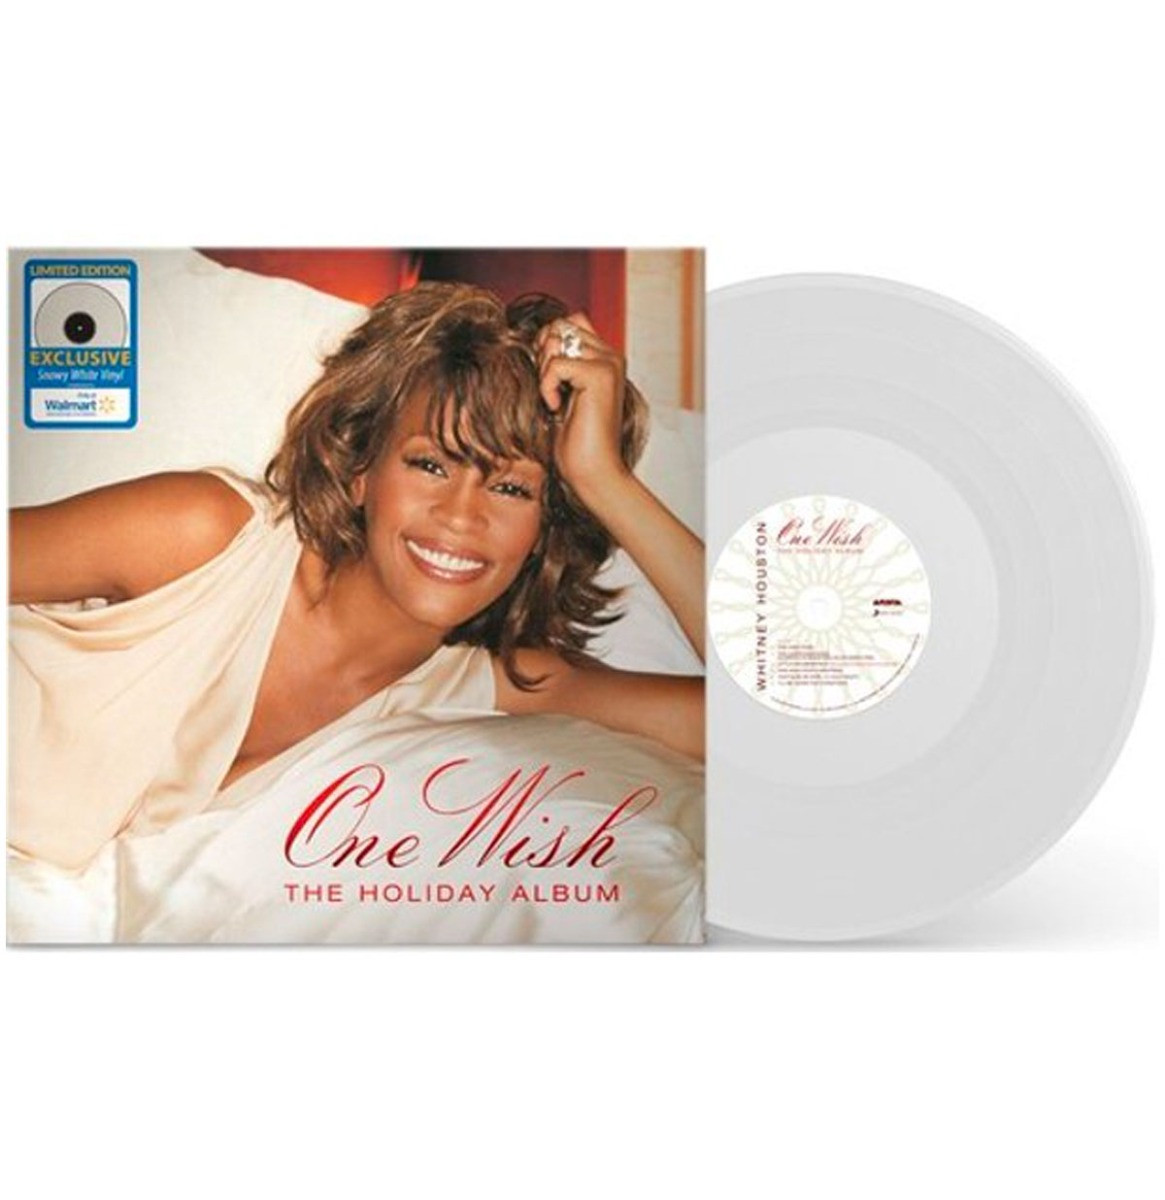 Whitney Houston - One Wish: The Holiday Album (Gekleurd Vinyl) (Walmart Exclusive) LP